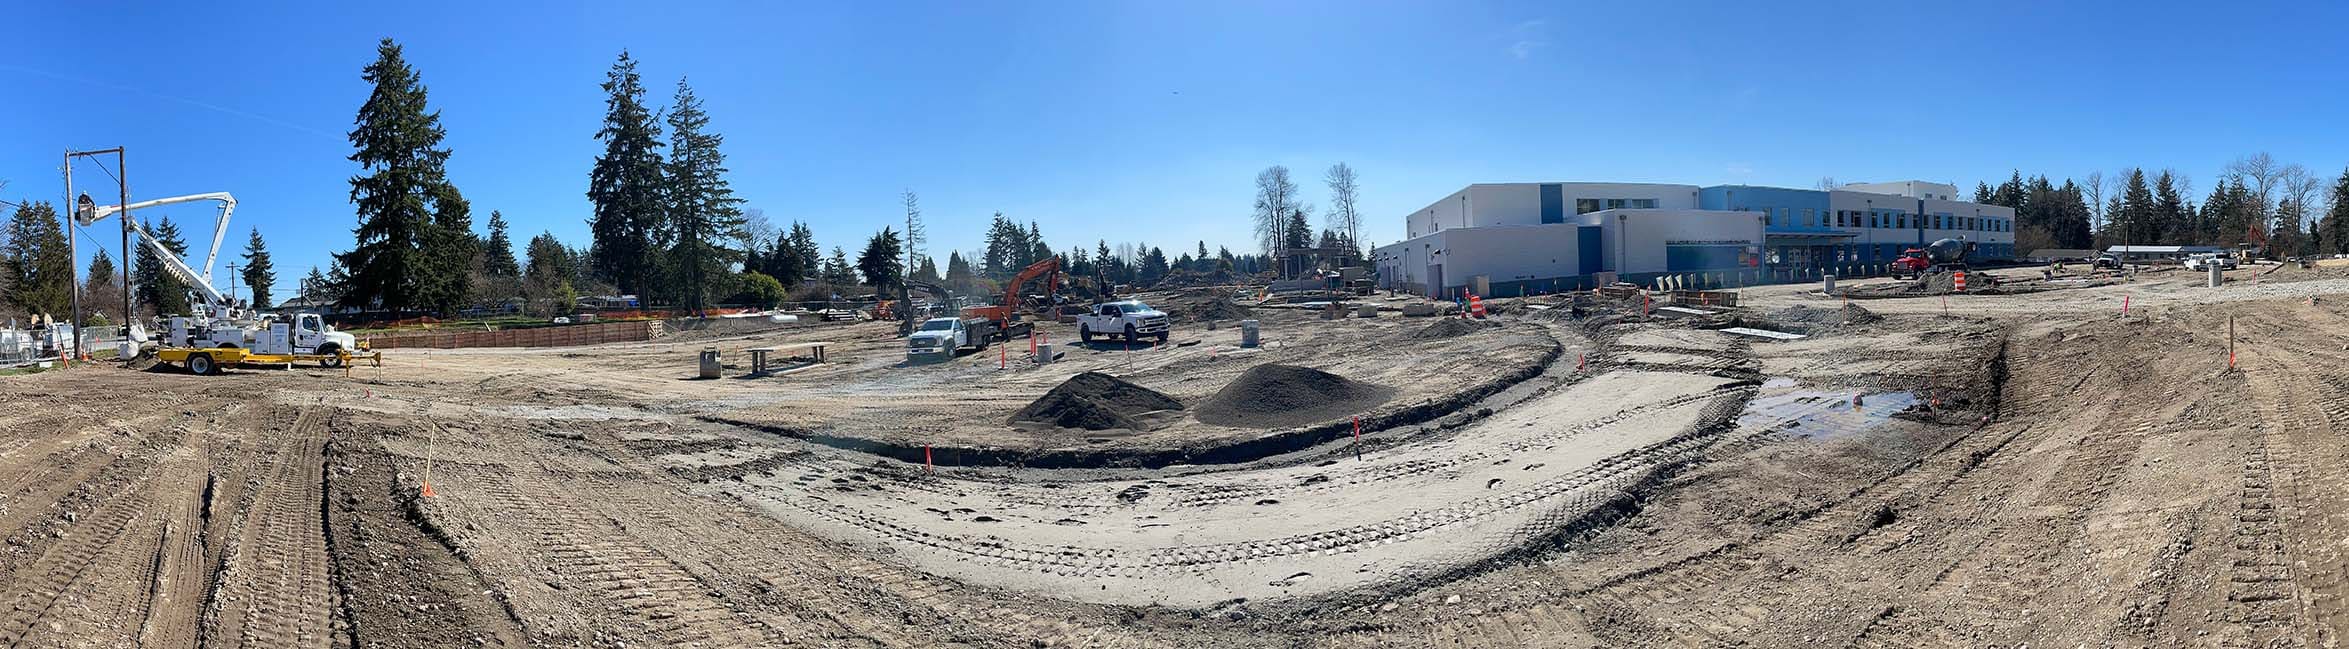 Photo of the Mirror Lake Elementary School job site